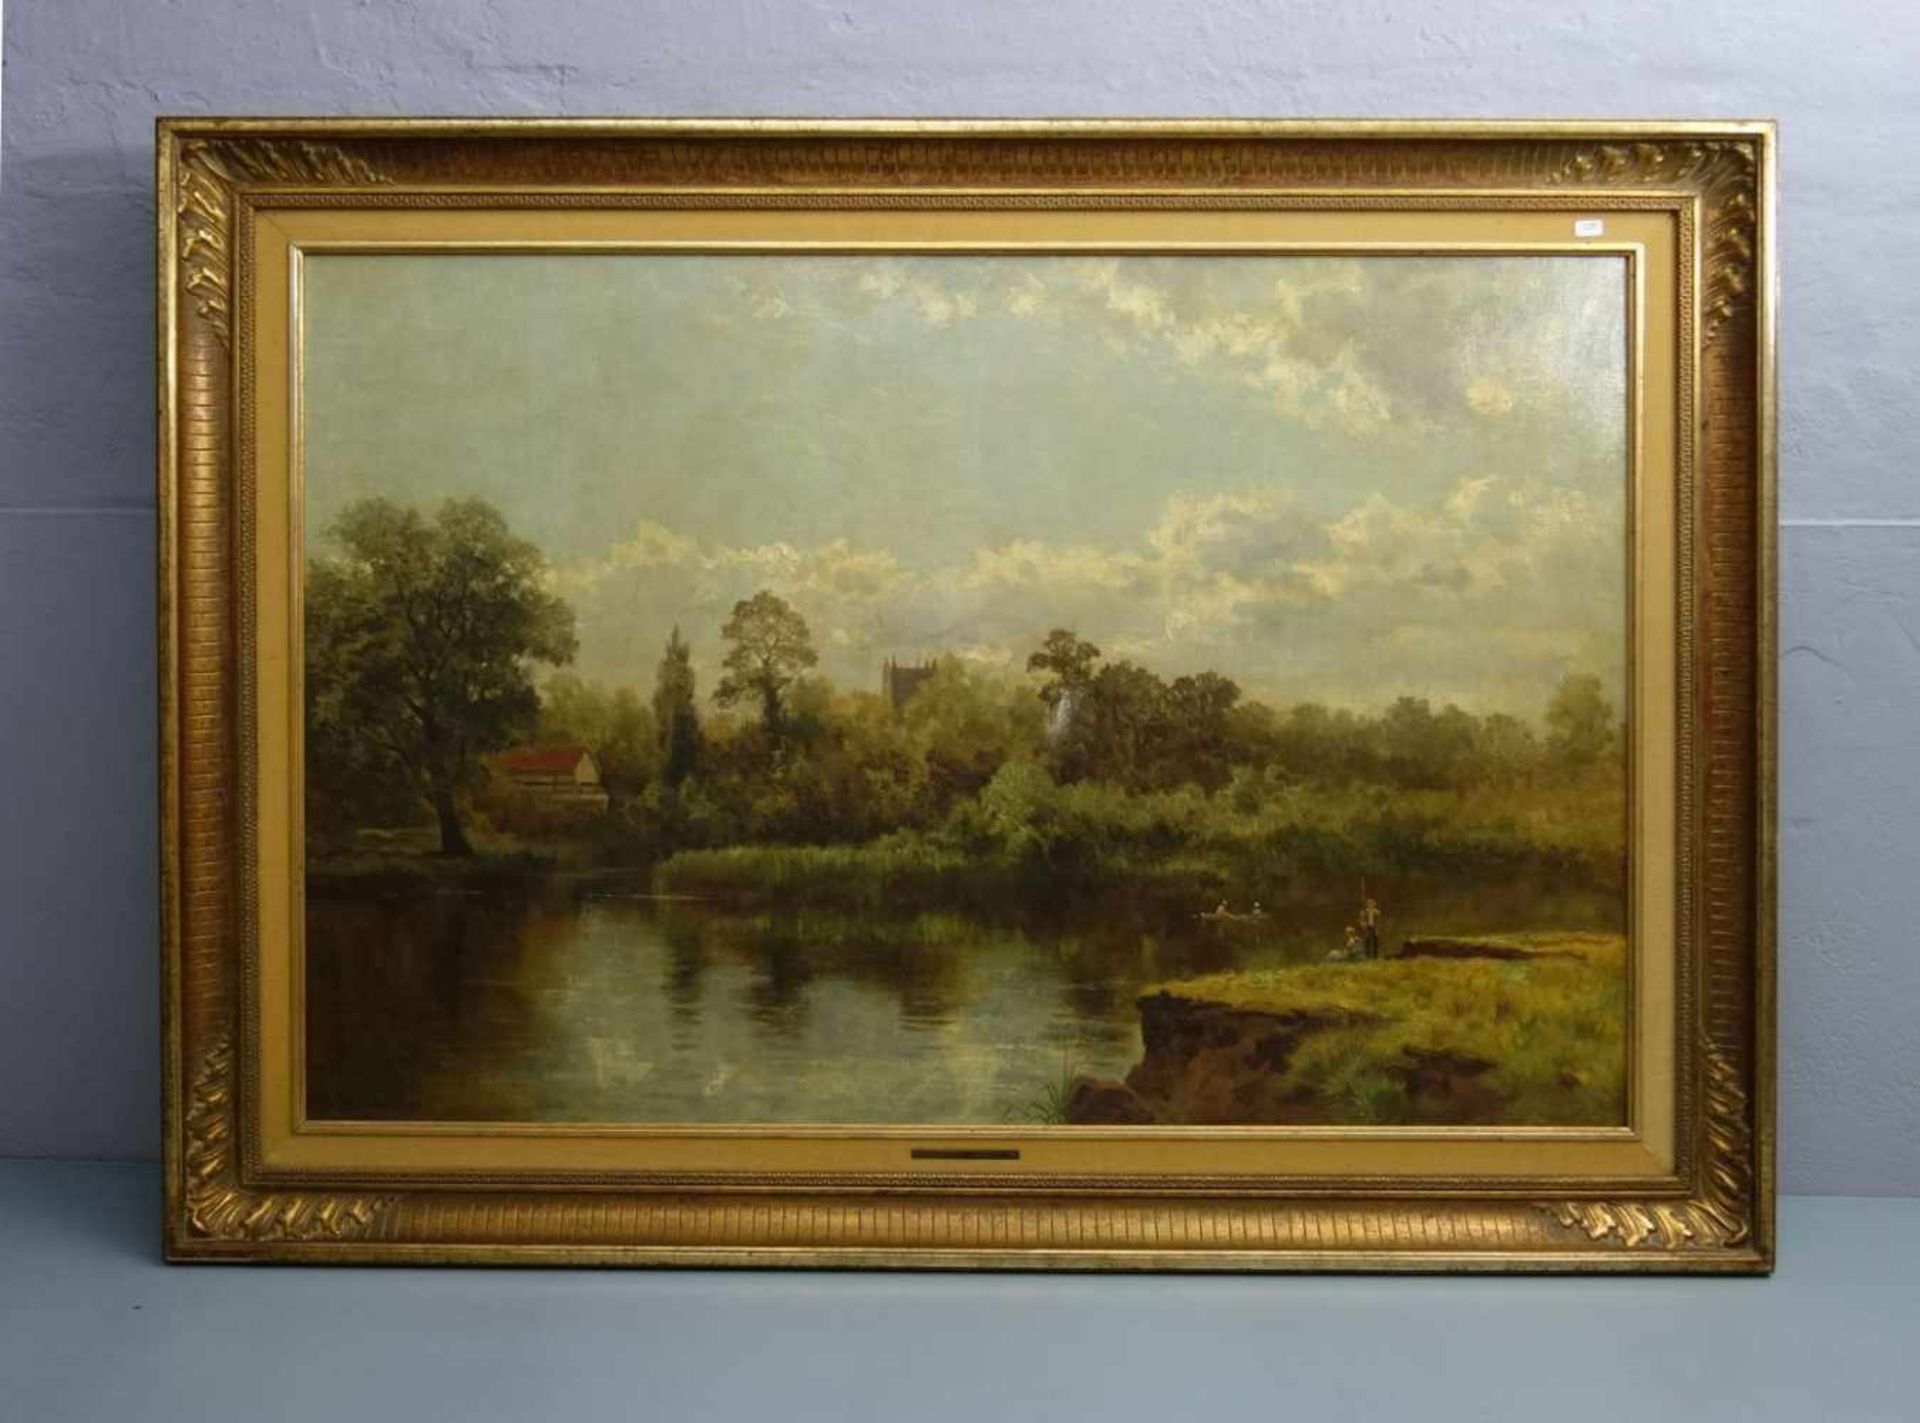 COLLIER, ARTHUR BEVAN (Plymouth 1832 - 1908 Carthamartha), Gemälde / painting: "Flusslandschaft", Öl